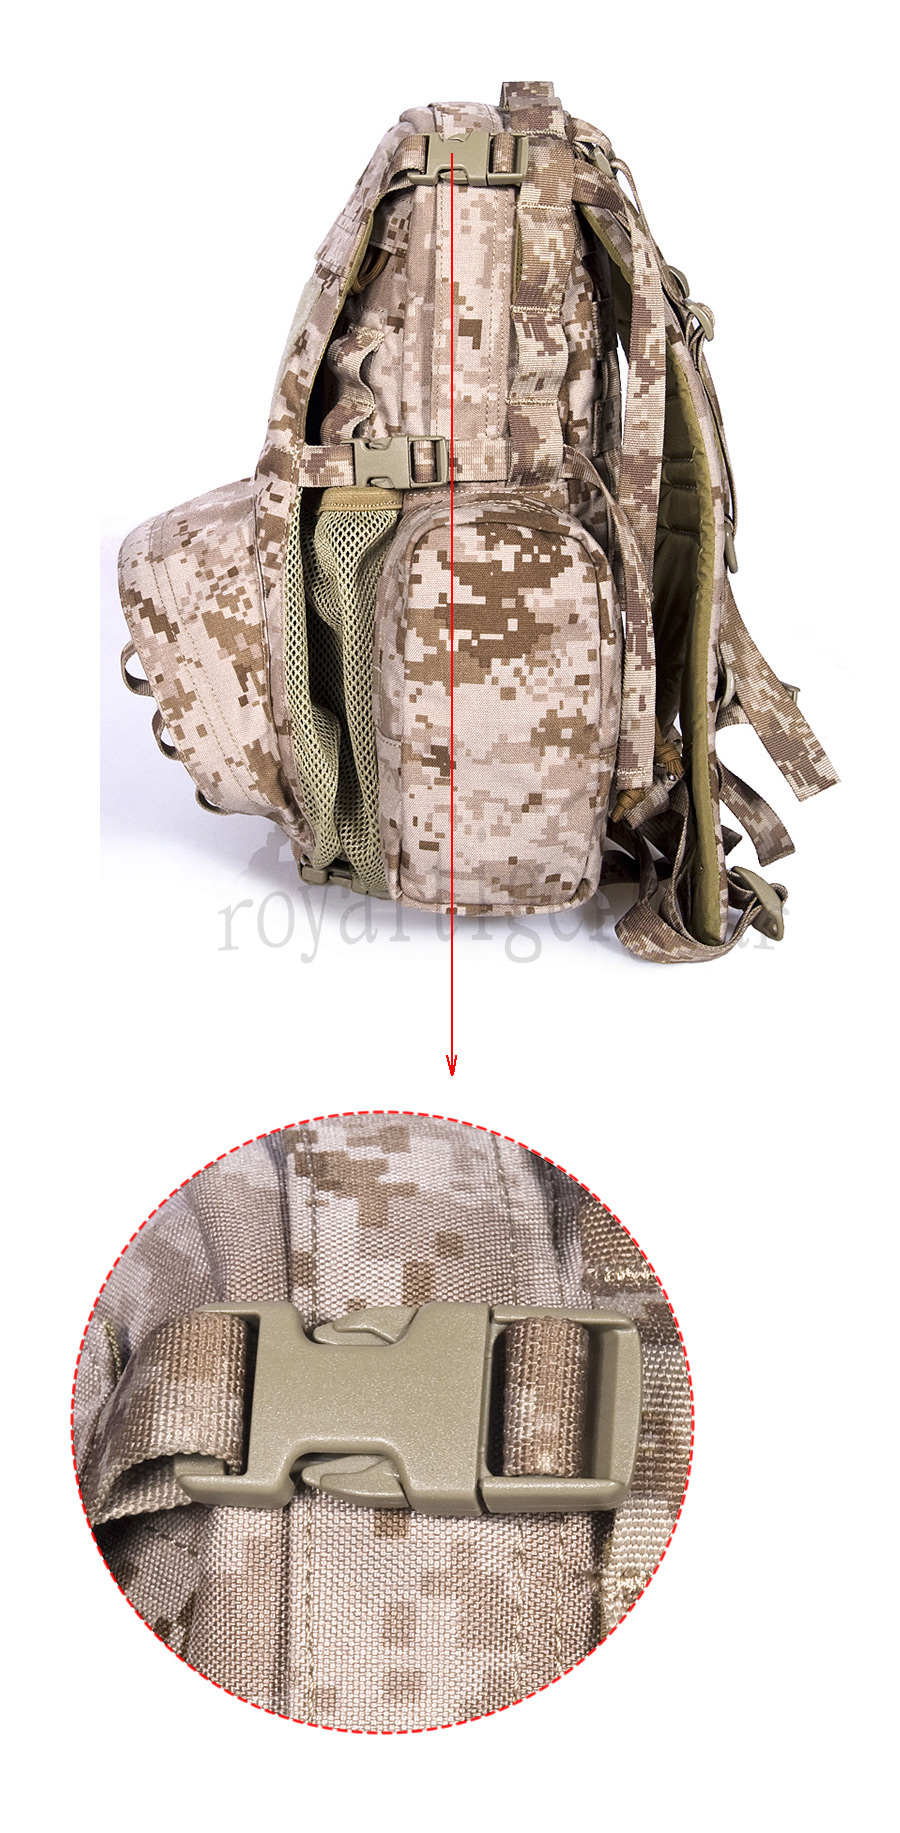 ROYALTIGER Military Gear